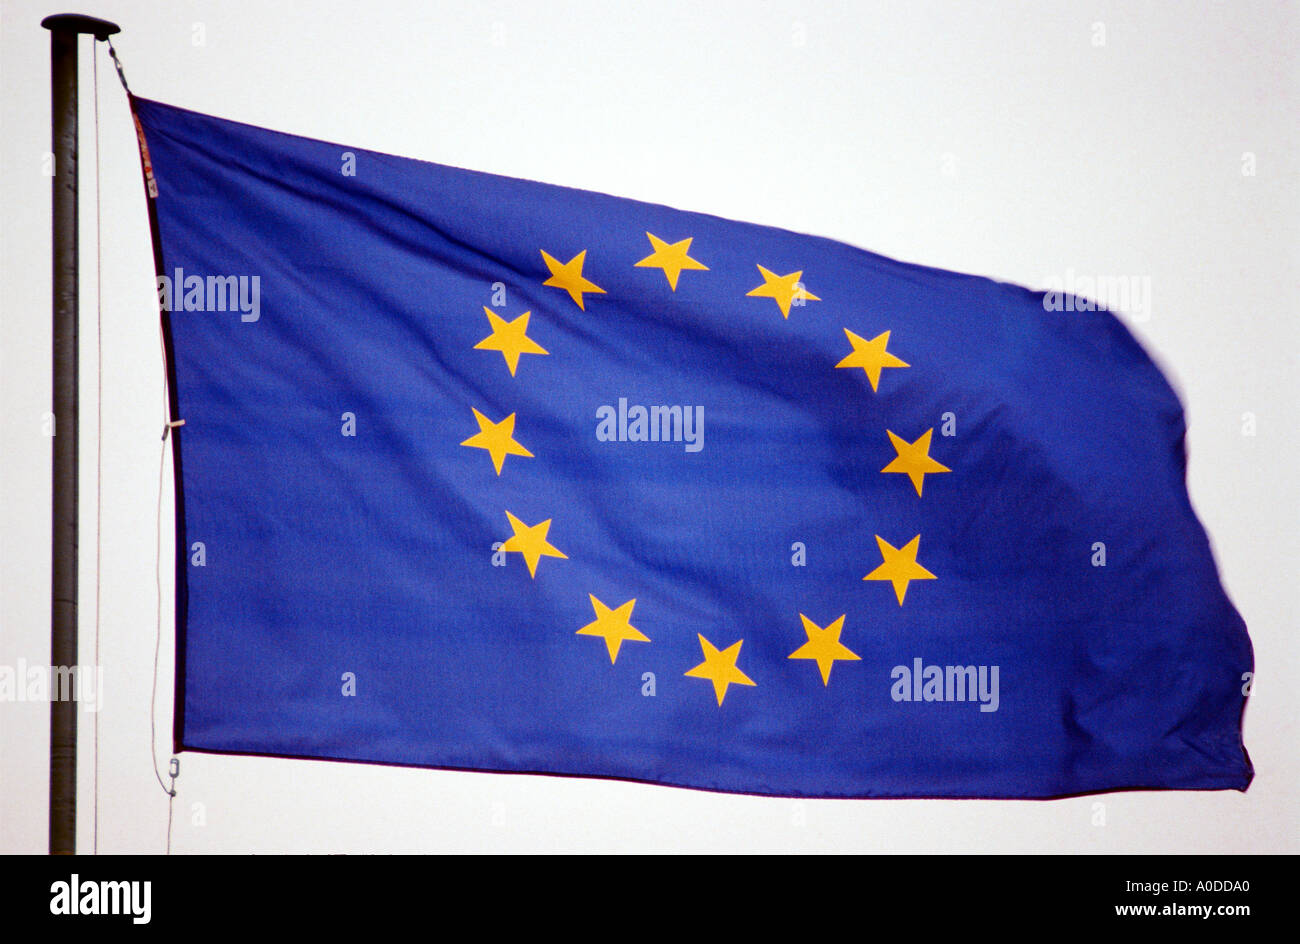 Europa Flagge Stern Sterne Blau Gelb Weht Im Wind Stockfotografie Alamy